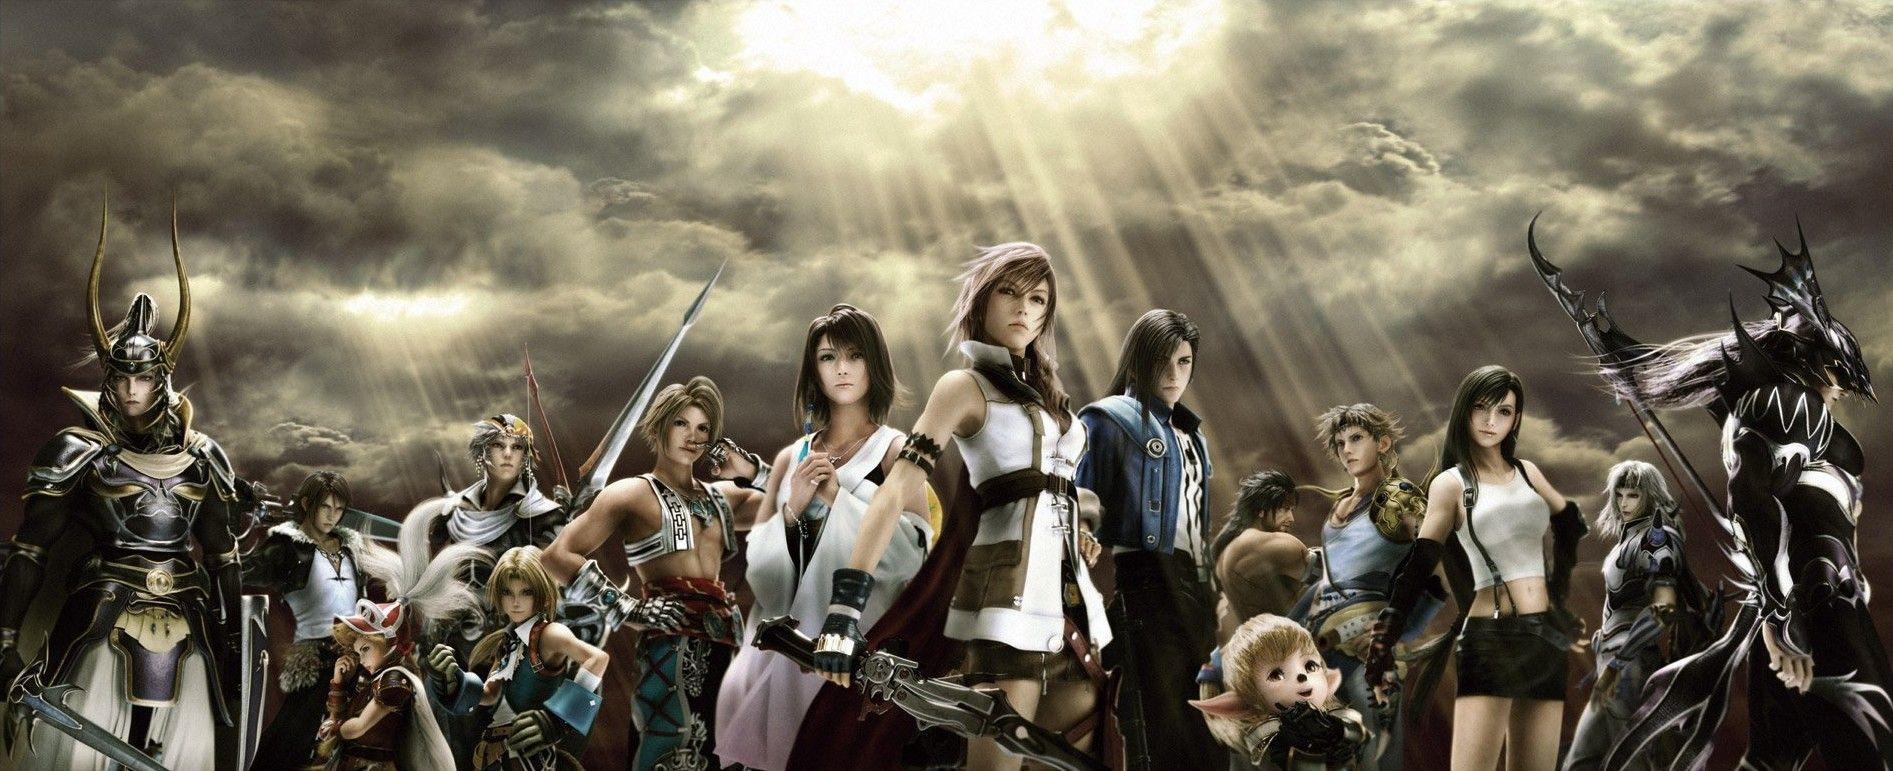 Final Fantasy XII Anime Image Board